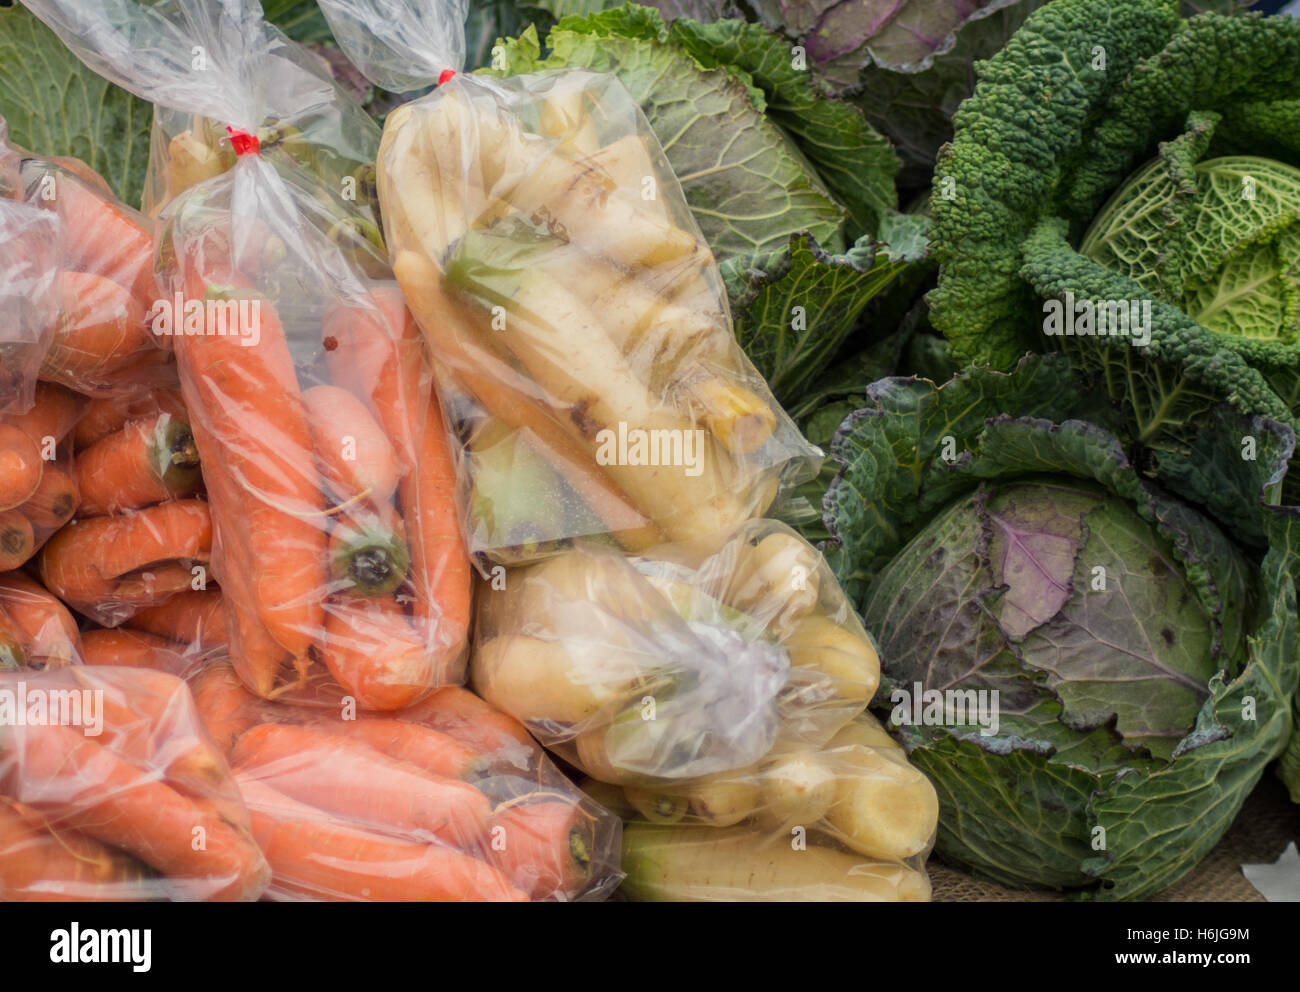 Gemüse für den Verkauf in Swansea Markt, Herbst 2016 - Karotten, Pastinaken, Kohl Stockfoto